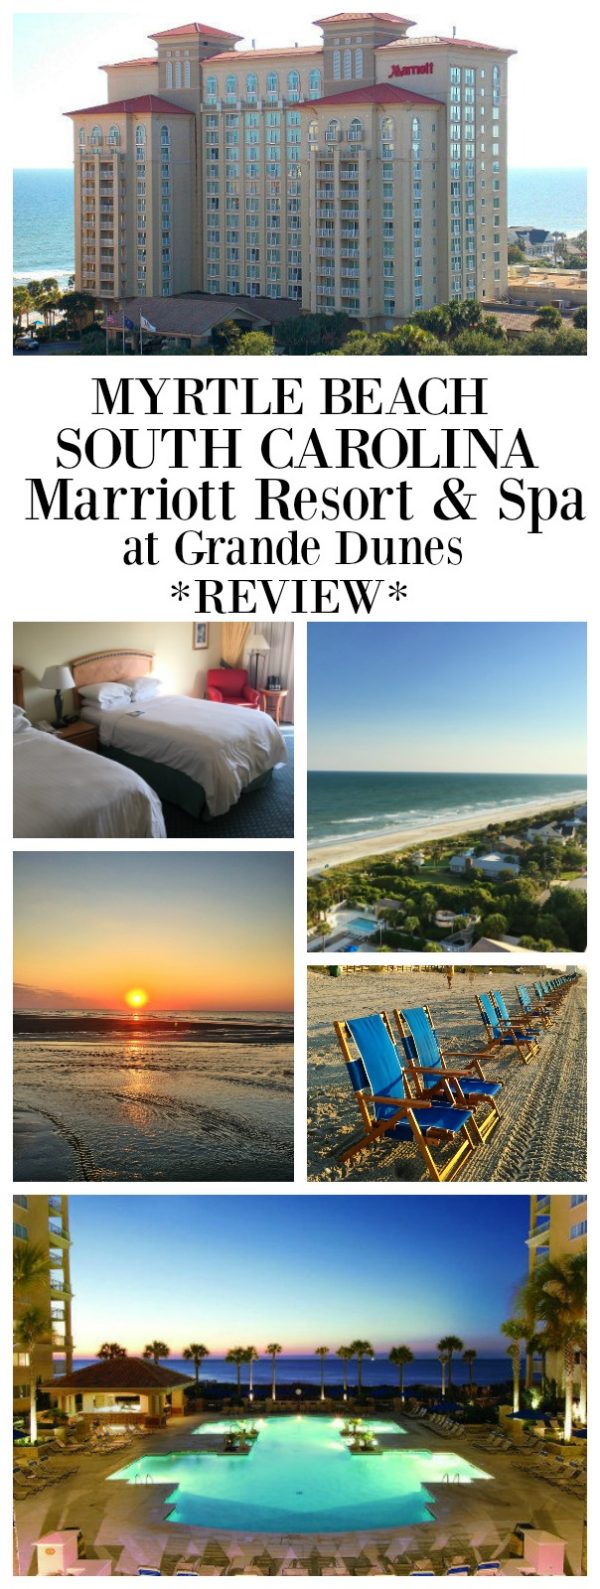 Myrtle Beach Marriott Resort and Spa- a review by RecipeGirl.com